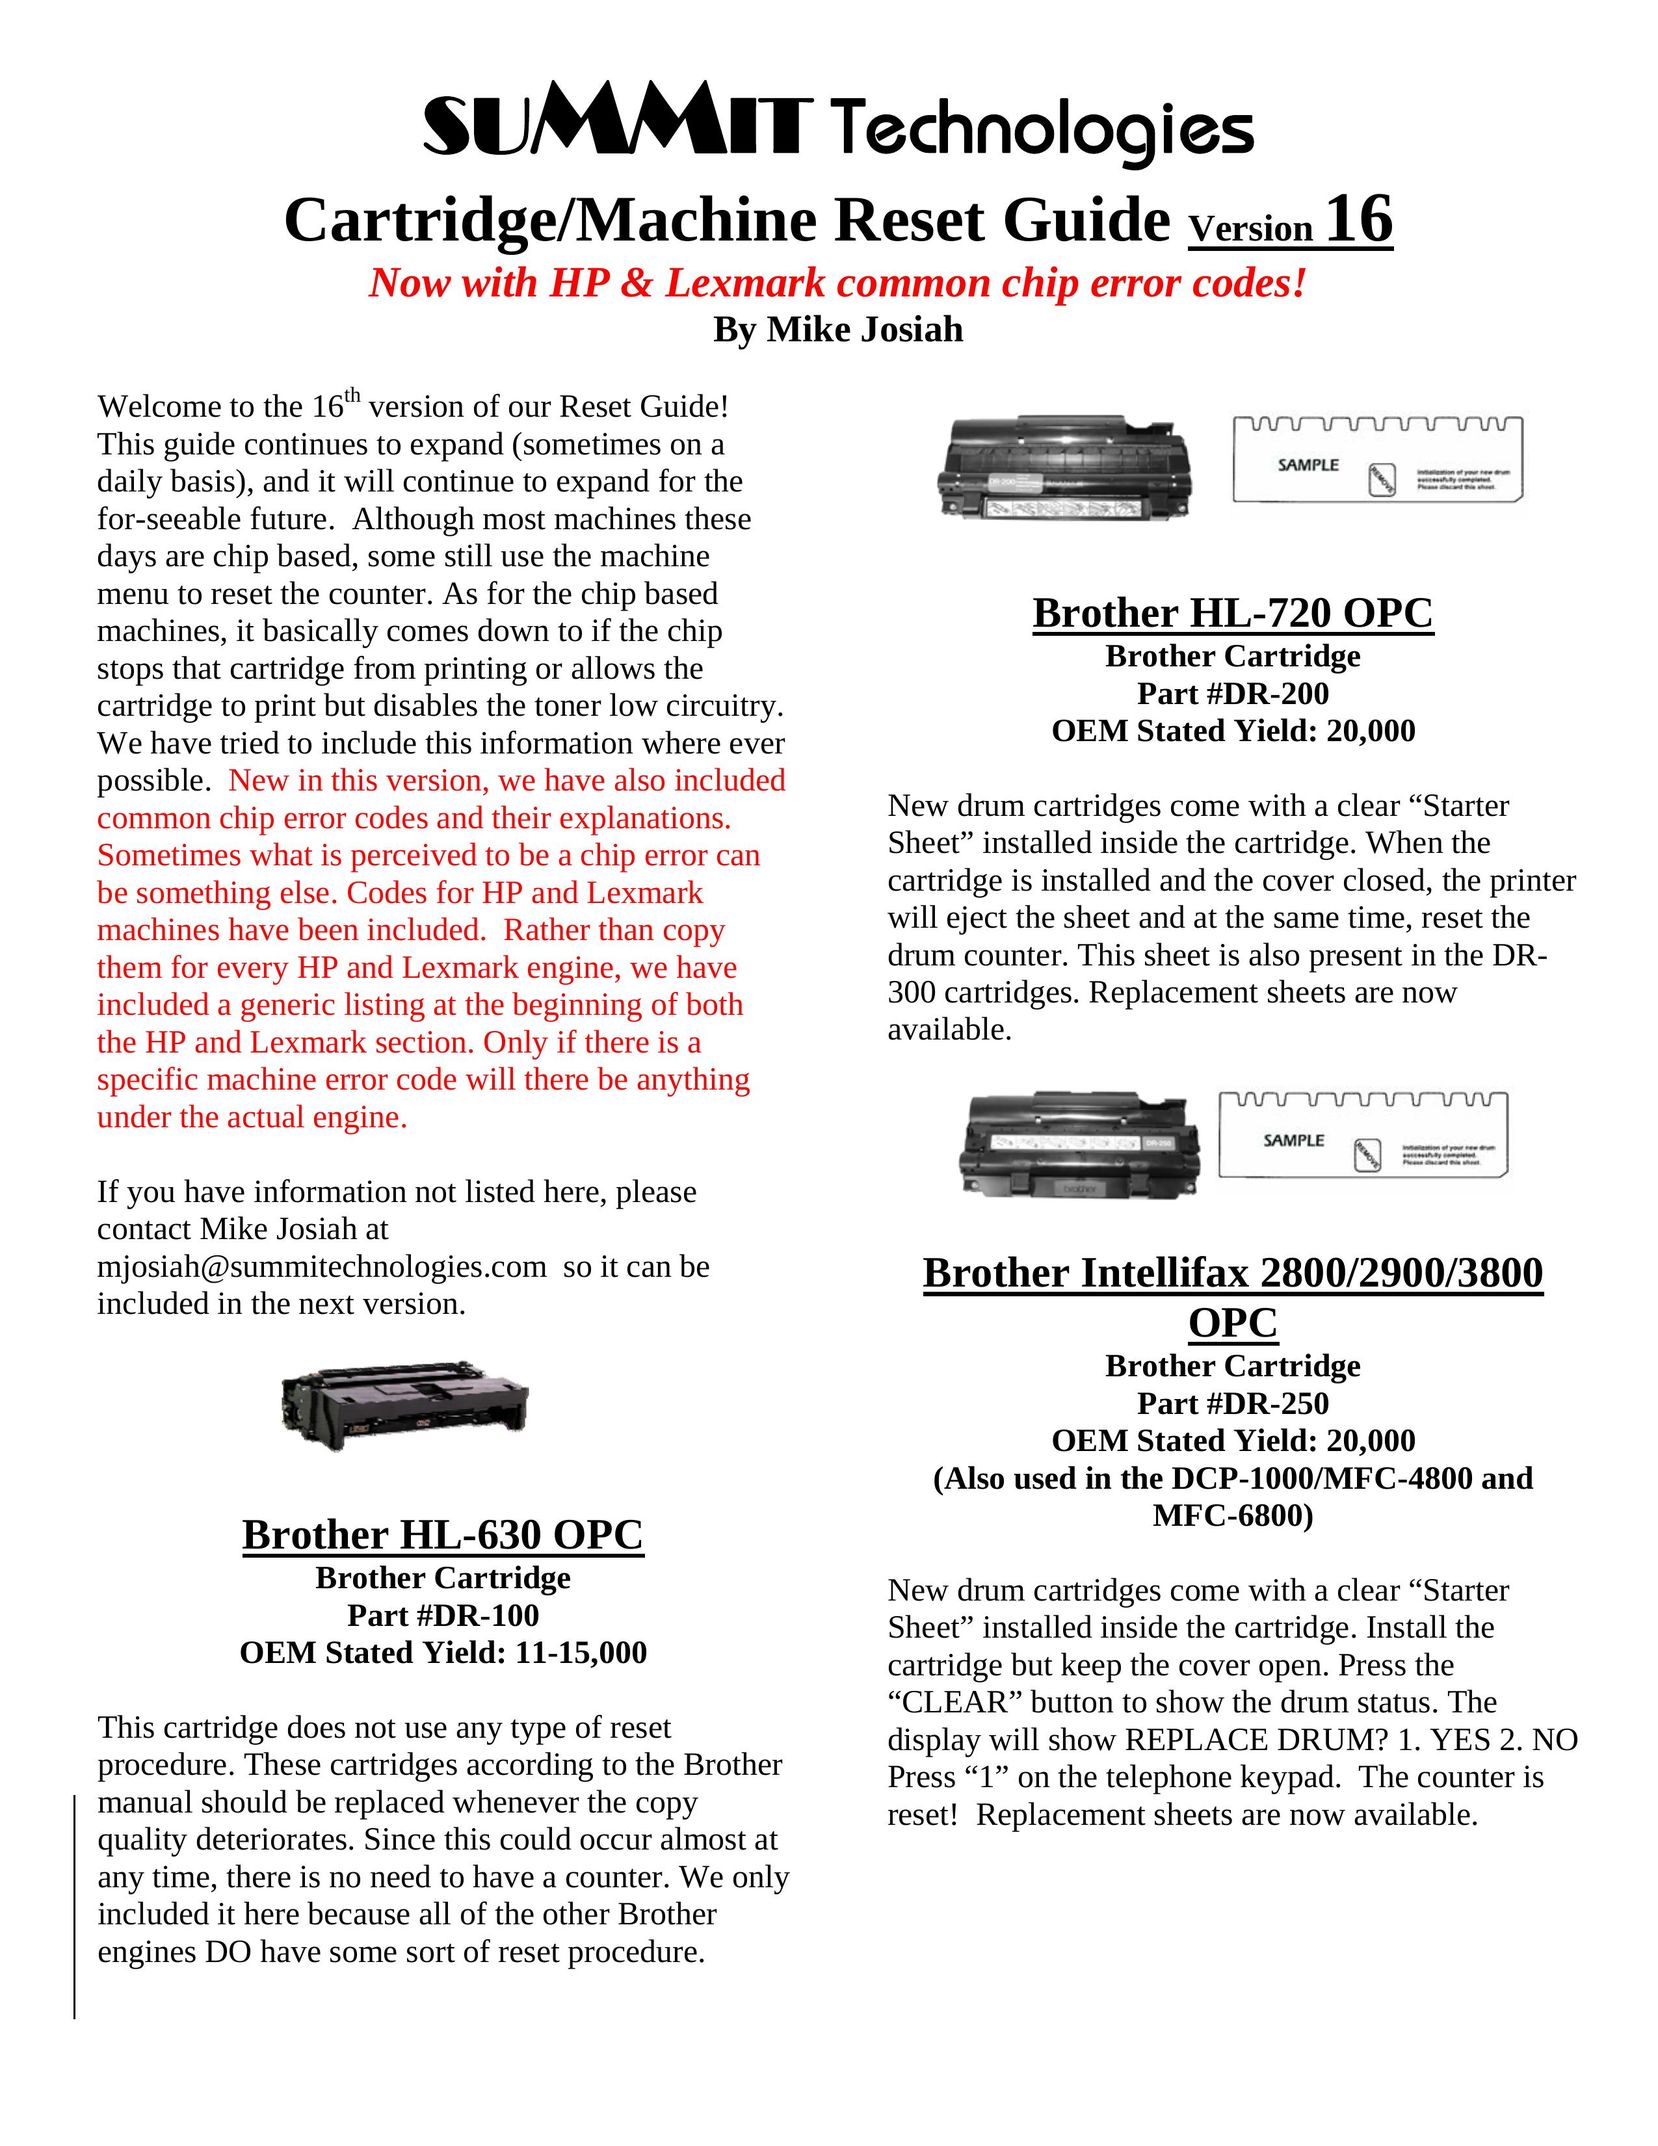 Summit HL-630 OPC Printer Accessories User Manual